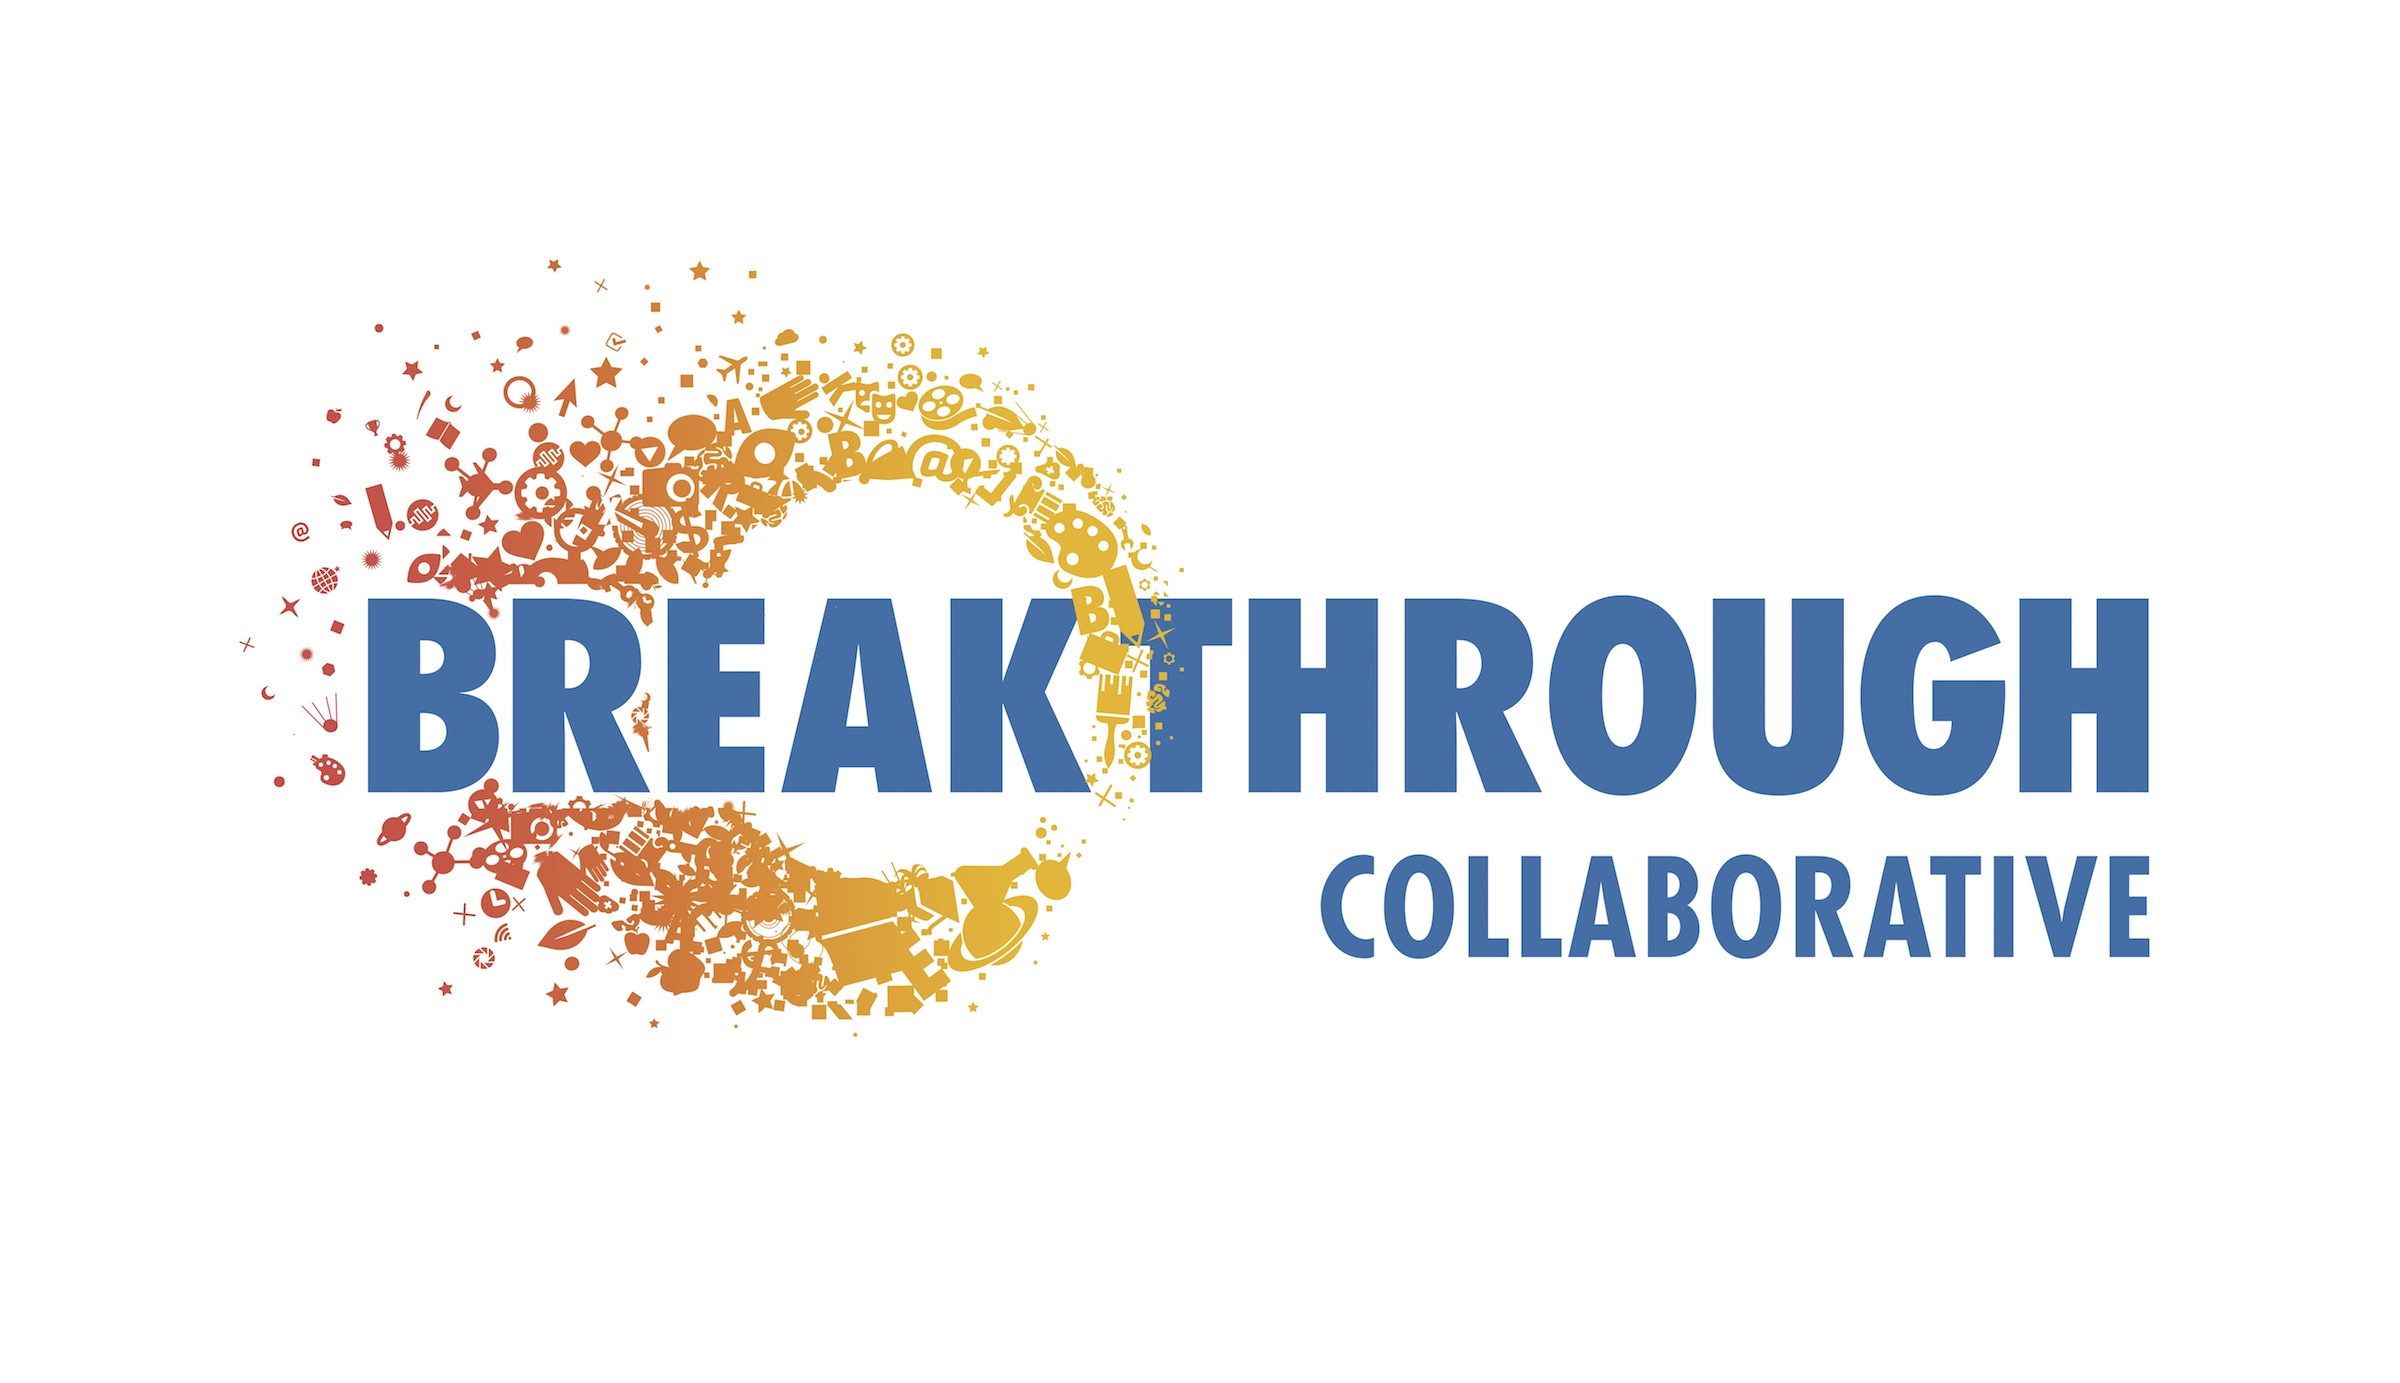 Breakthrough Collaborative